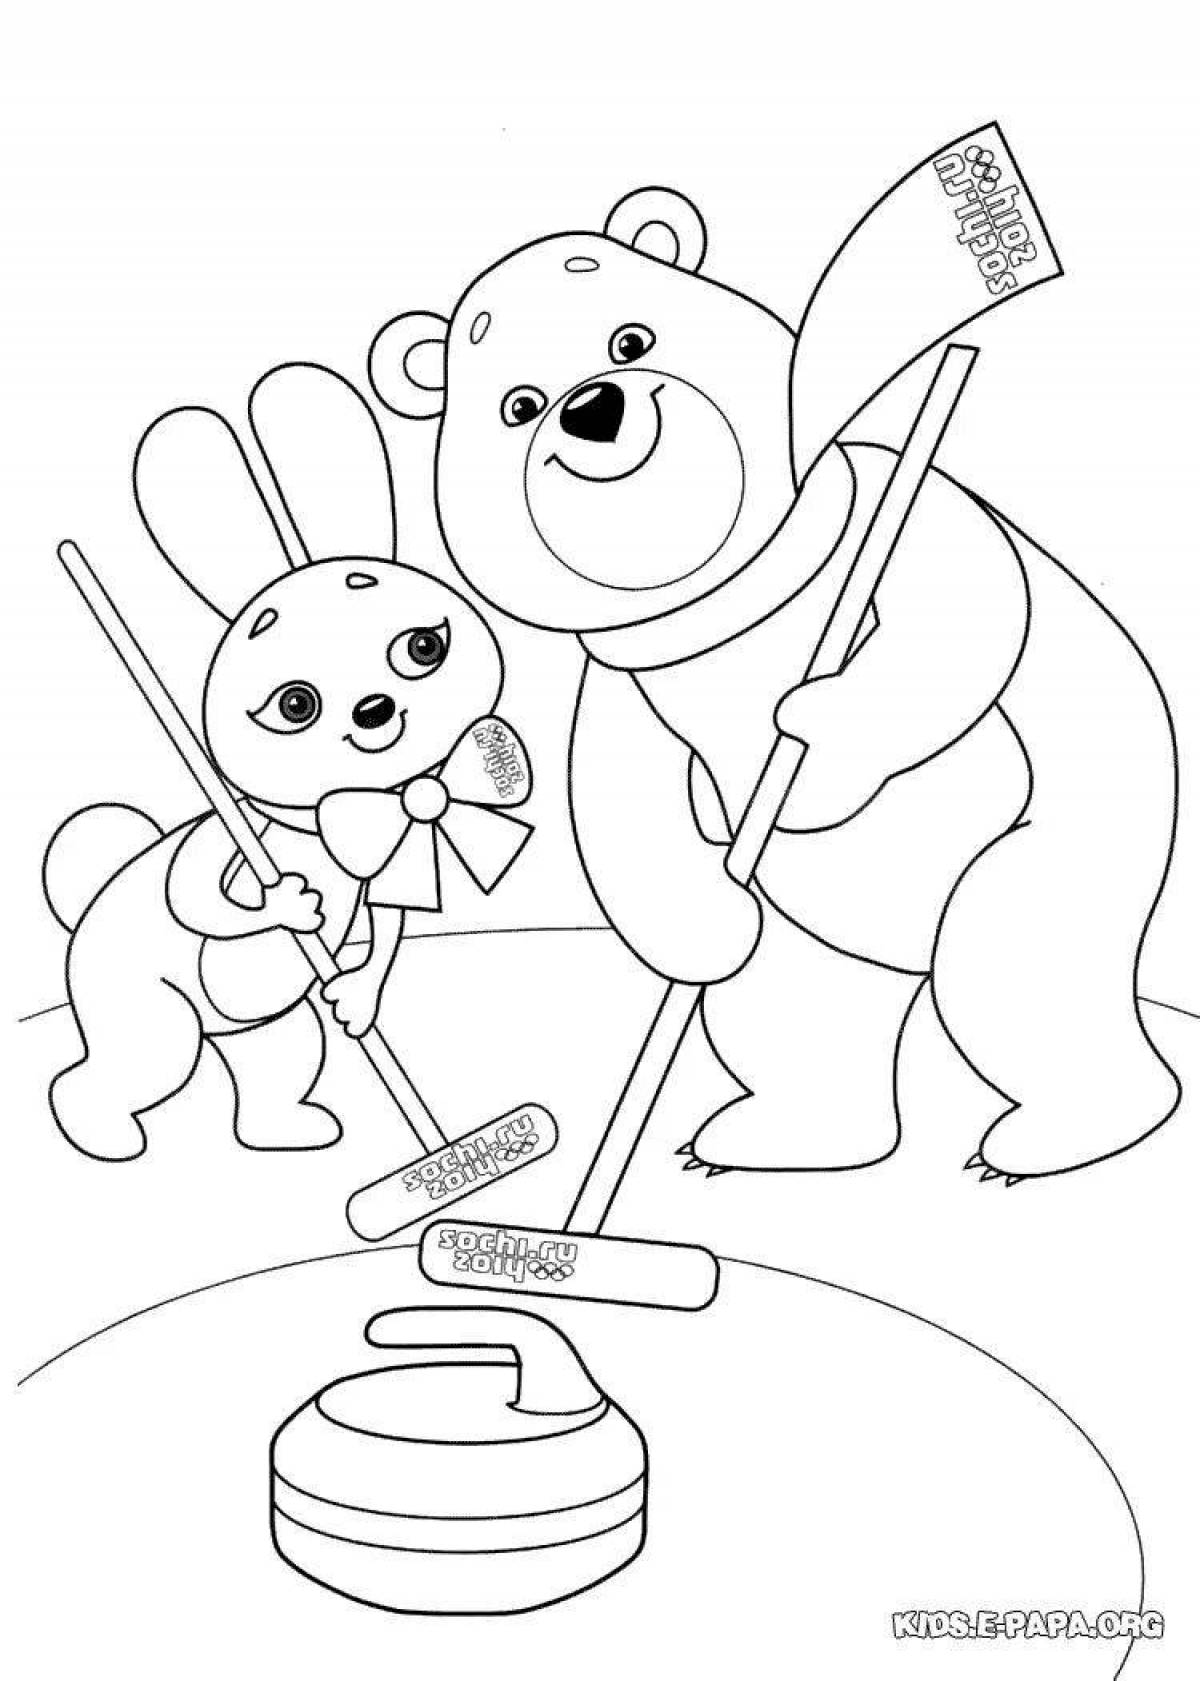 Violent bear and rabbit coloring book